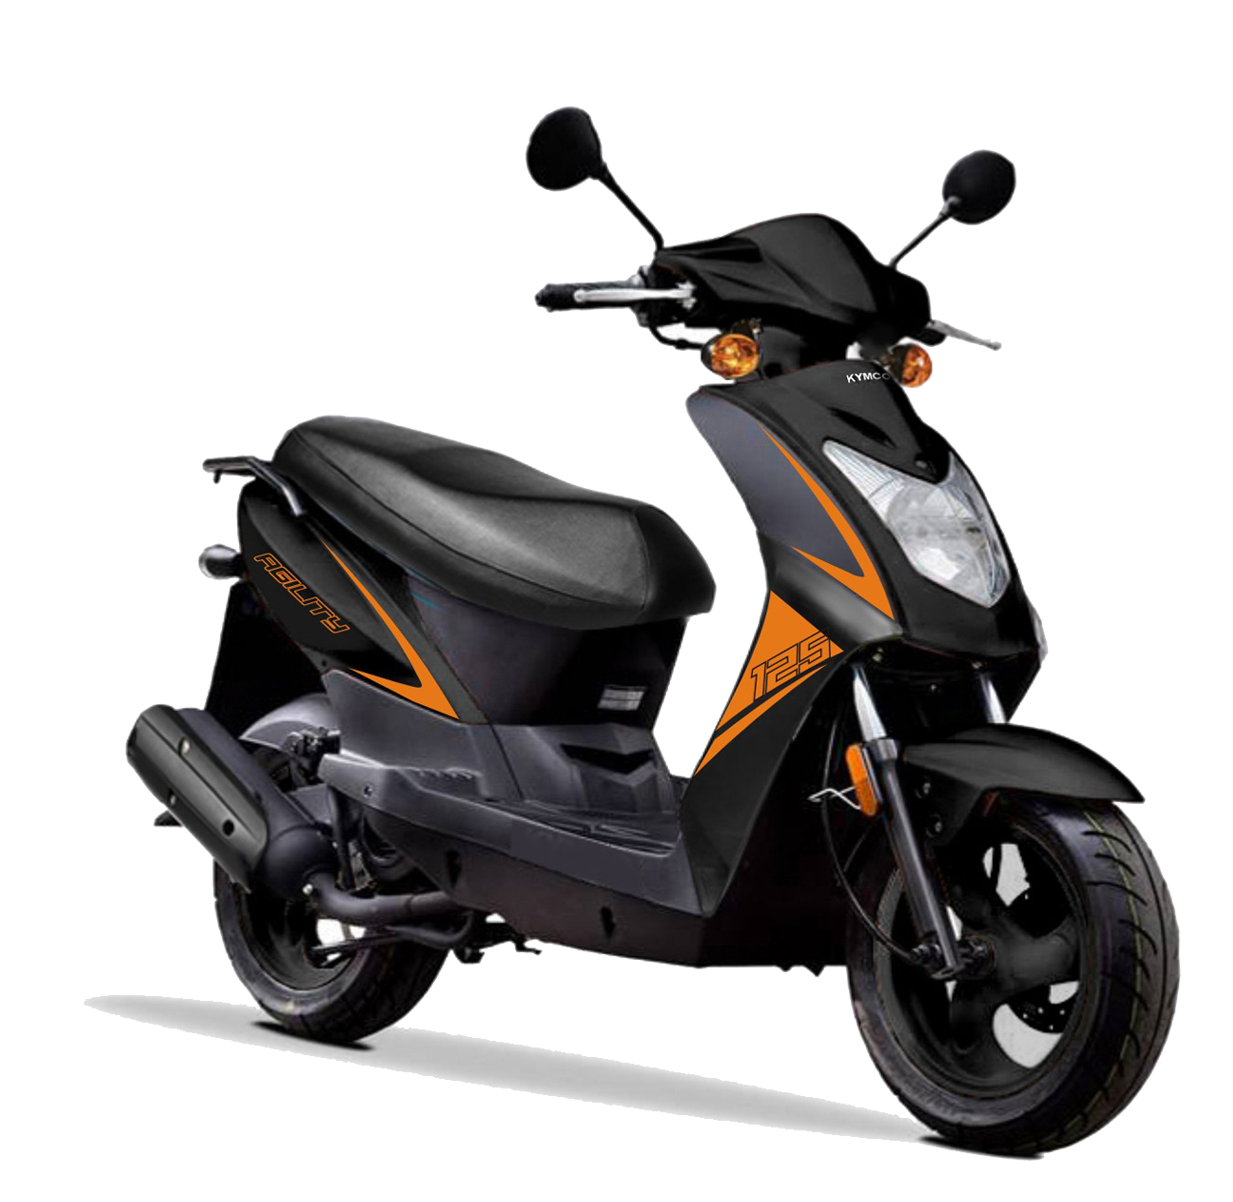 Agility City PLUS KYMCO, Moto Scooter 125 cc